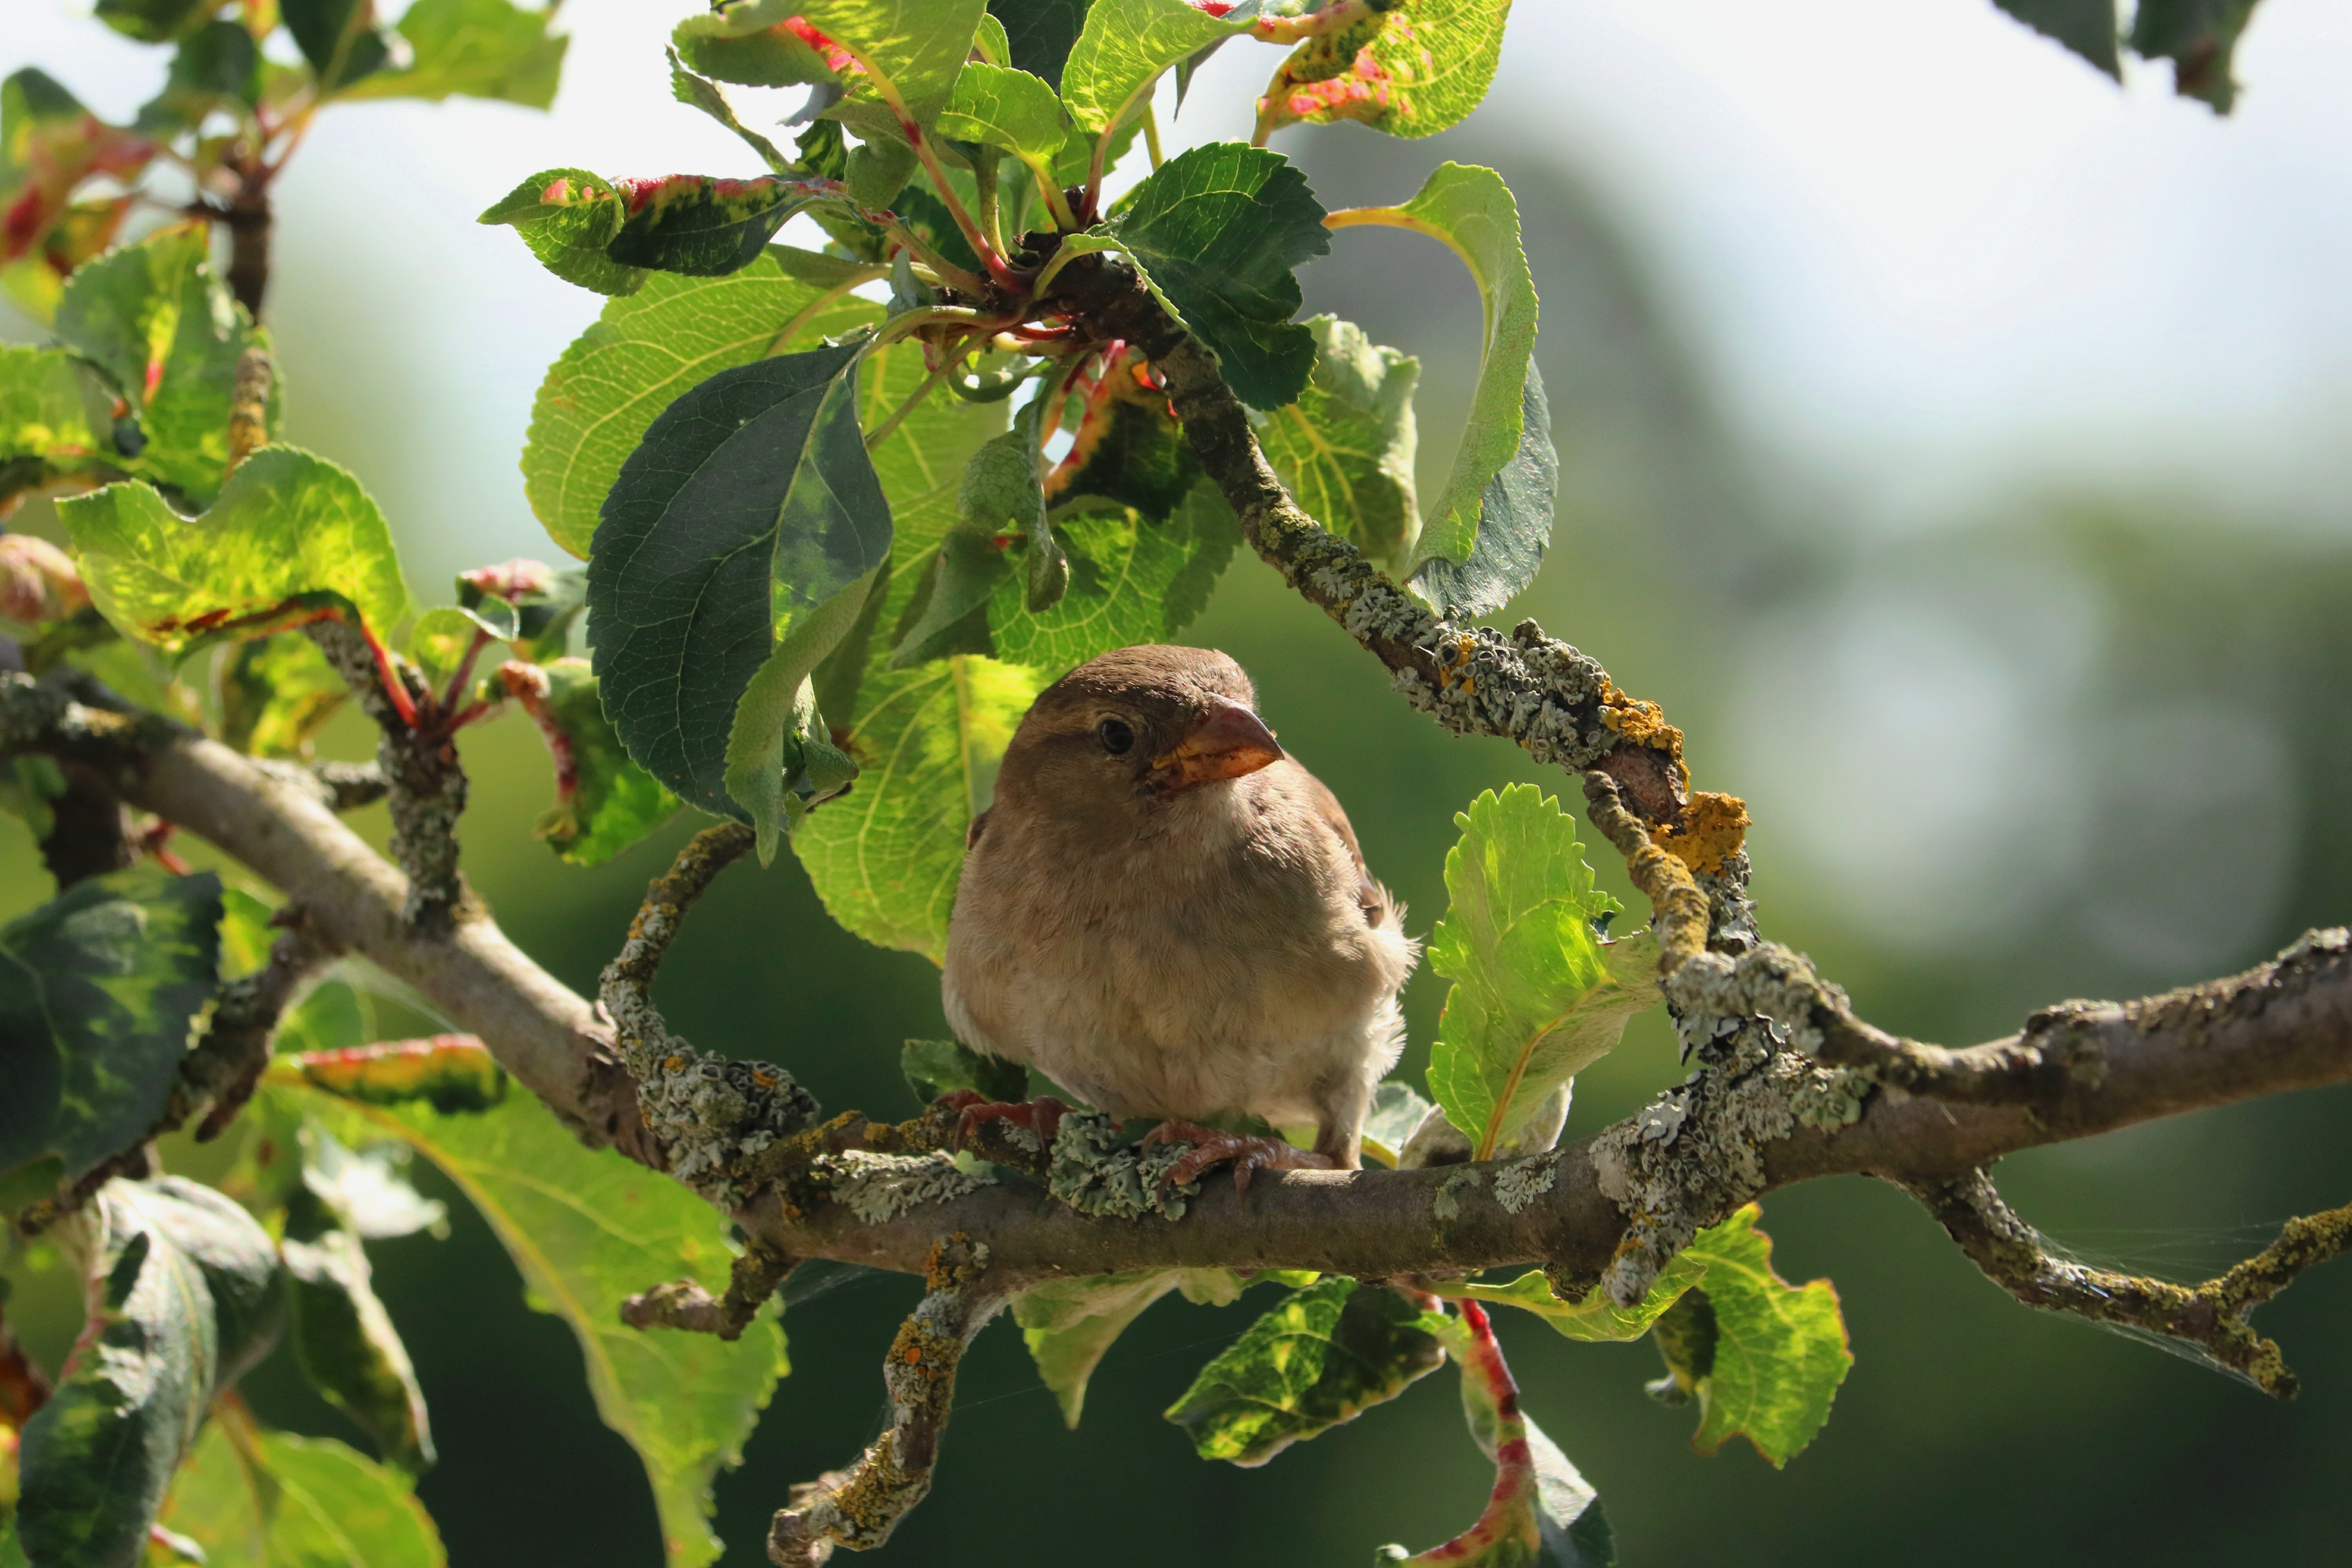 Brown bird on tree branch during daytime photo